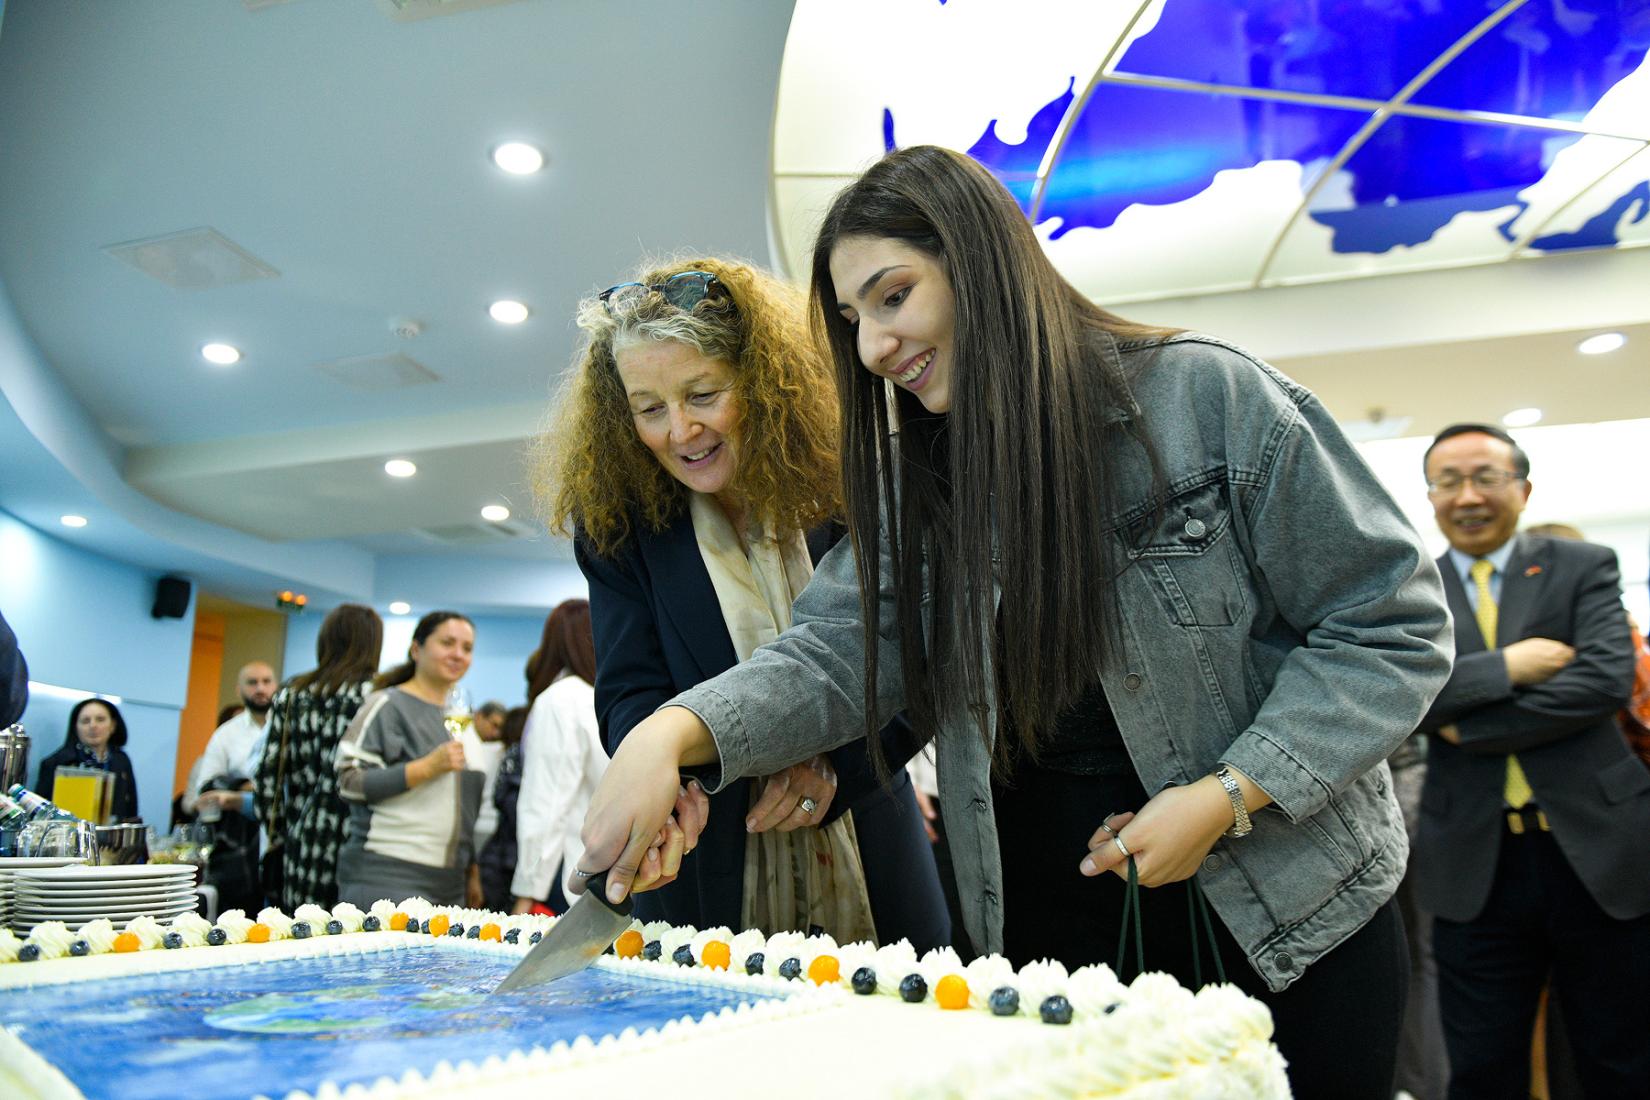 The Acting UN Resident Coordinator and Marina Petrosyan cut the cake.